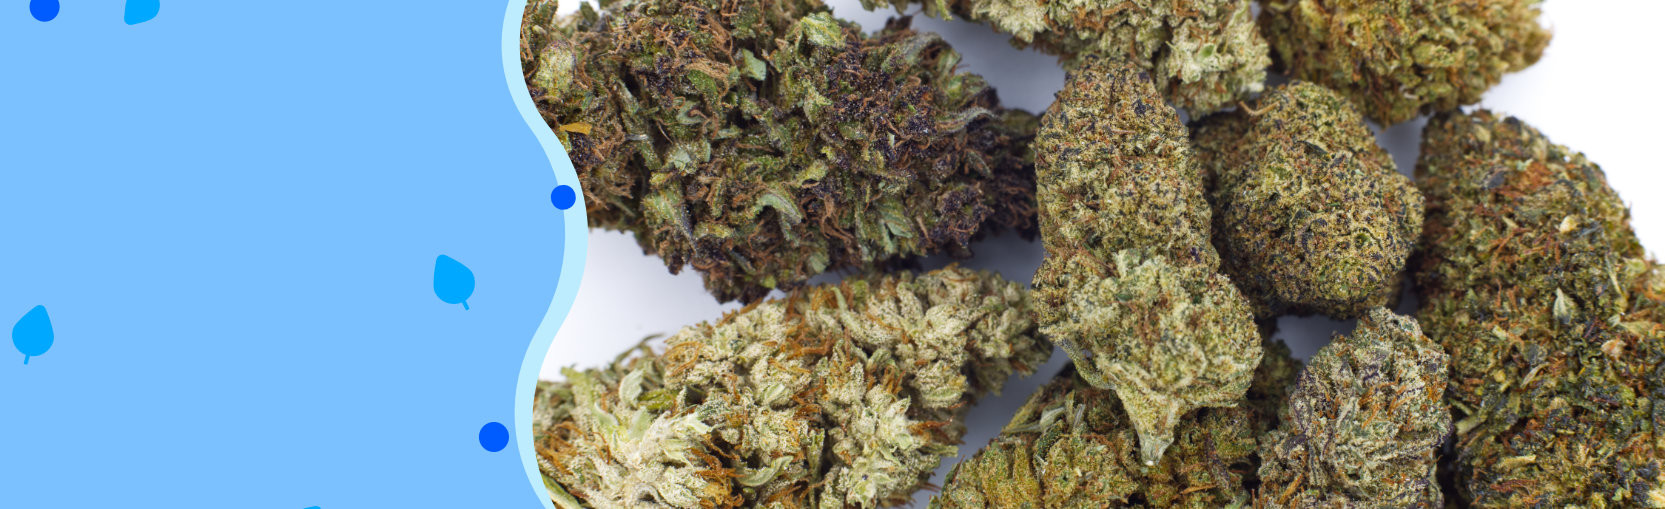 Highest Quality Cannabis Flower from hemp blossoms